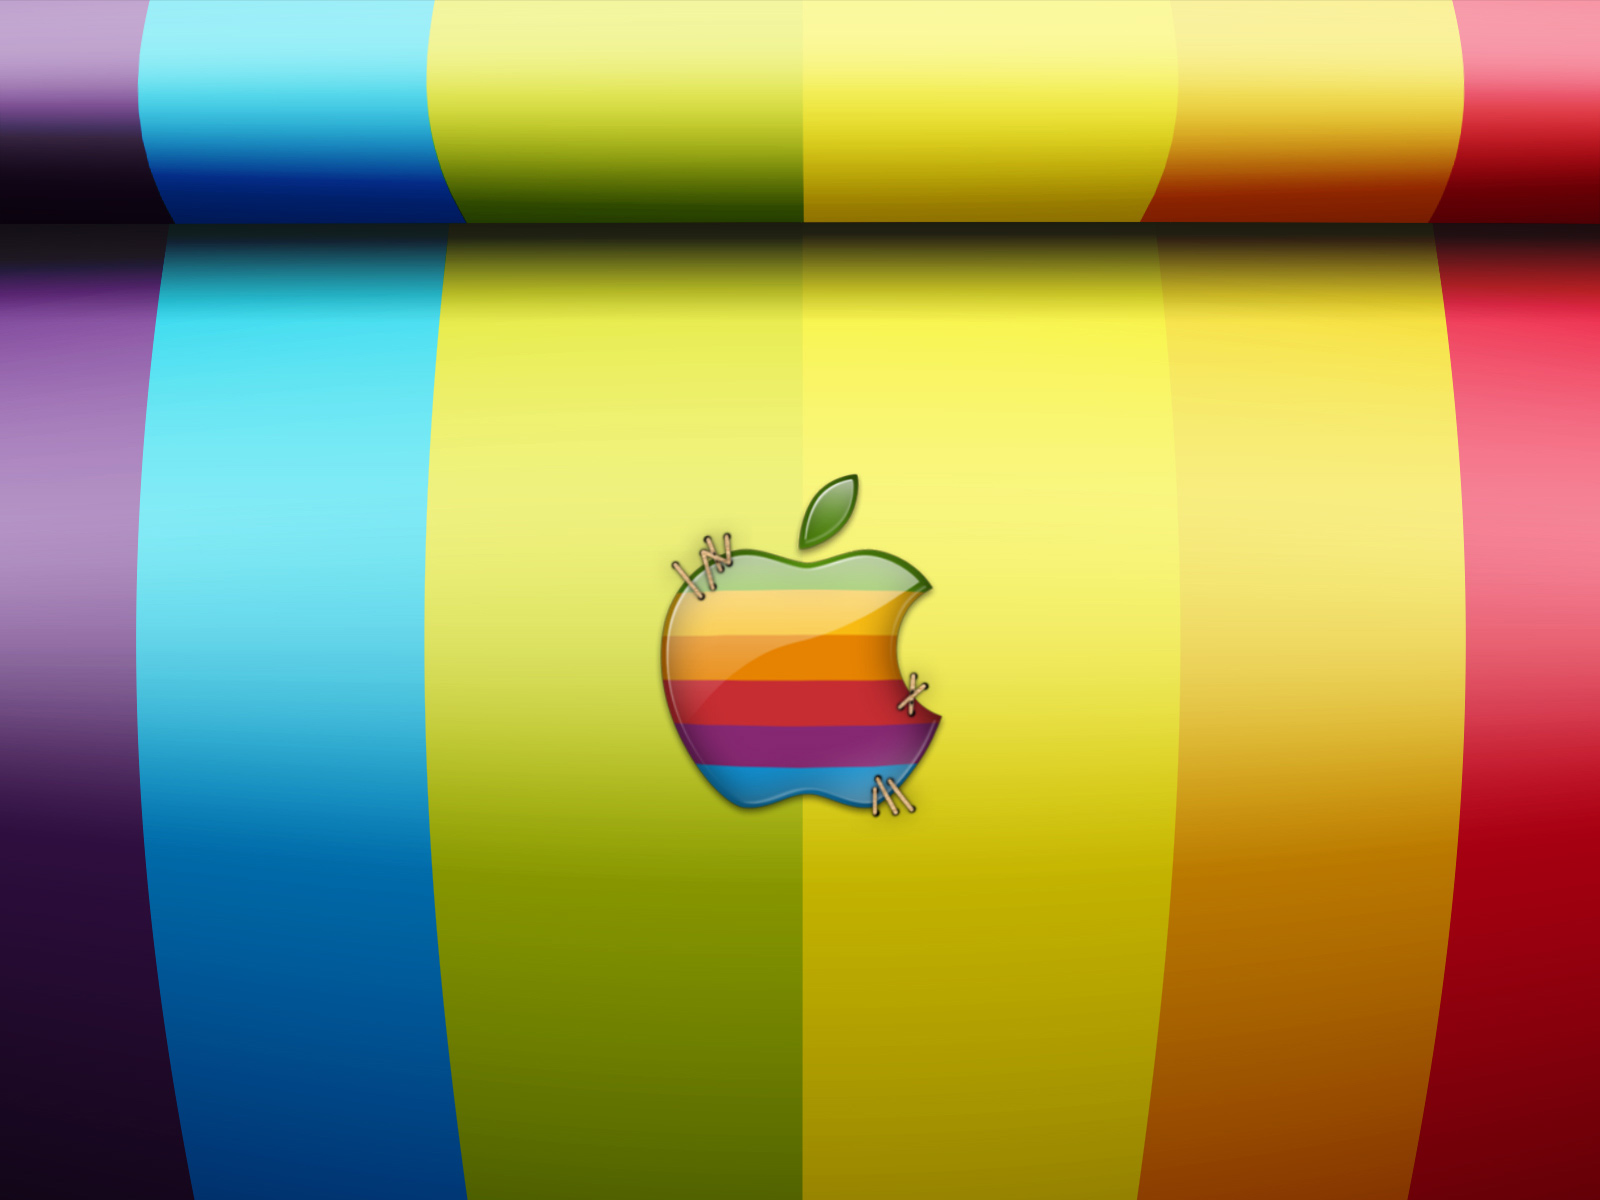 Desktop Wallpaper · Gallery · Computers · Apple - Mac OS | Free ...